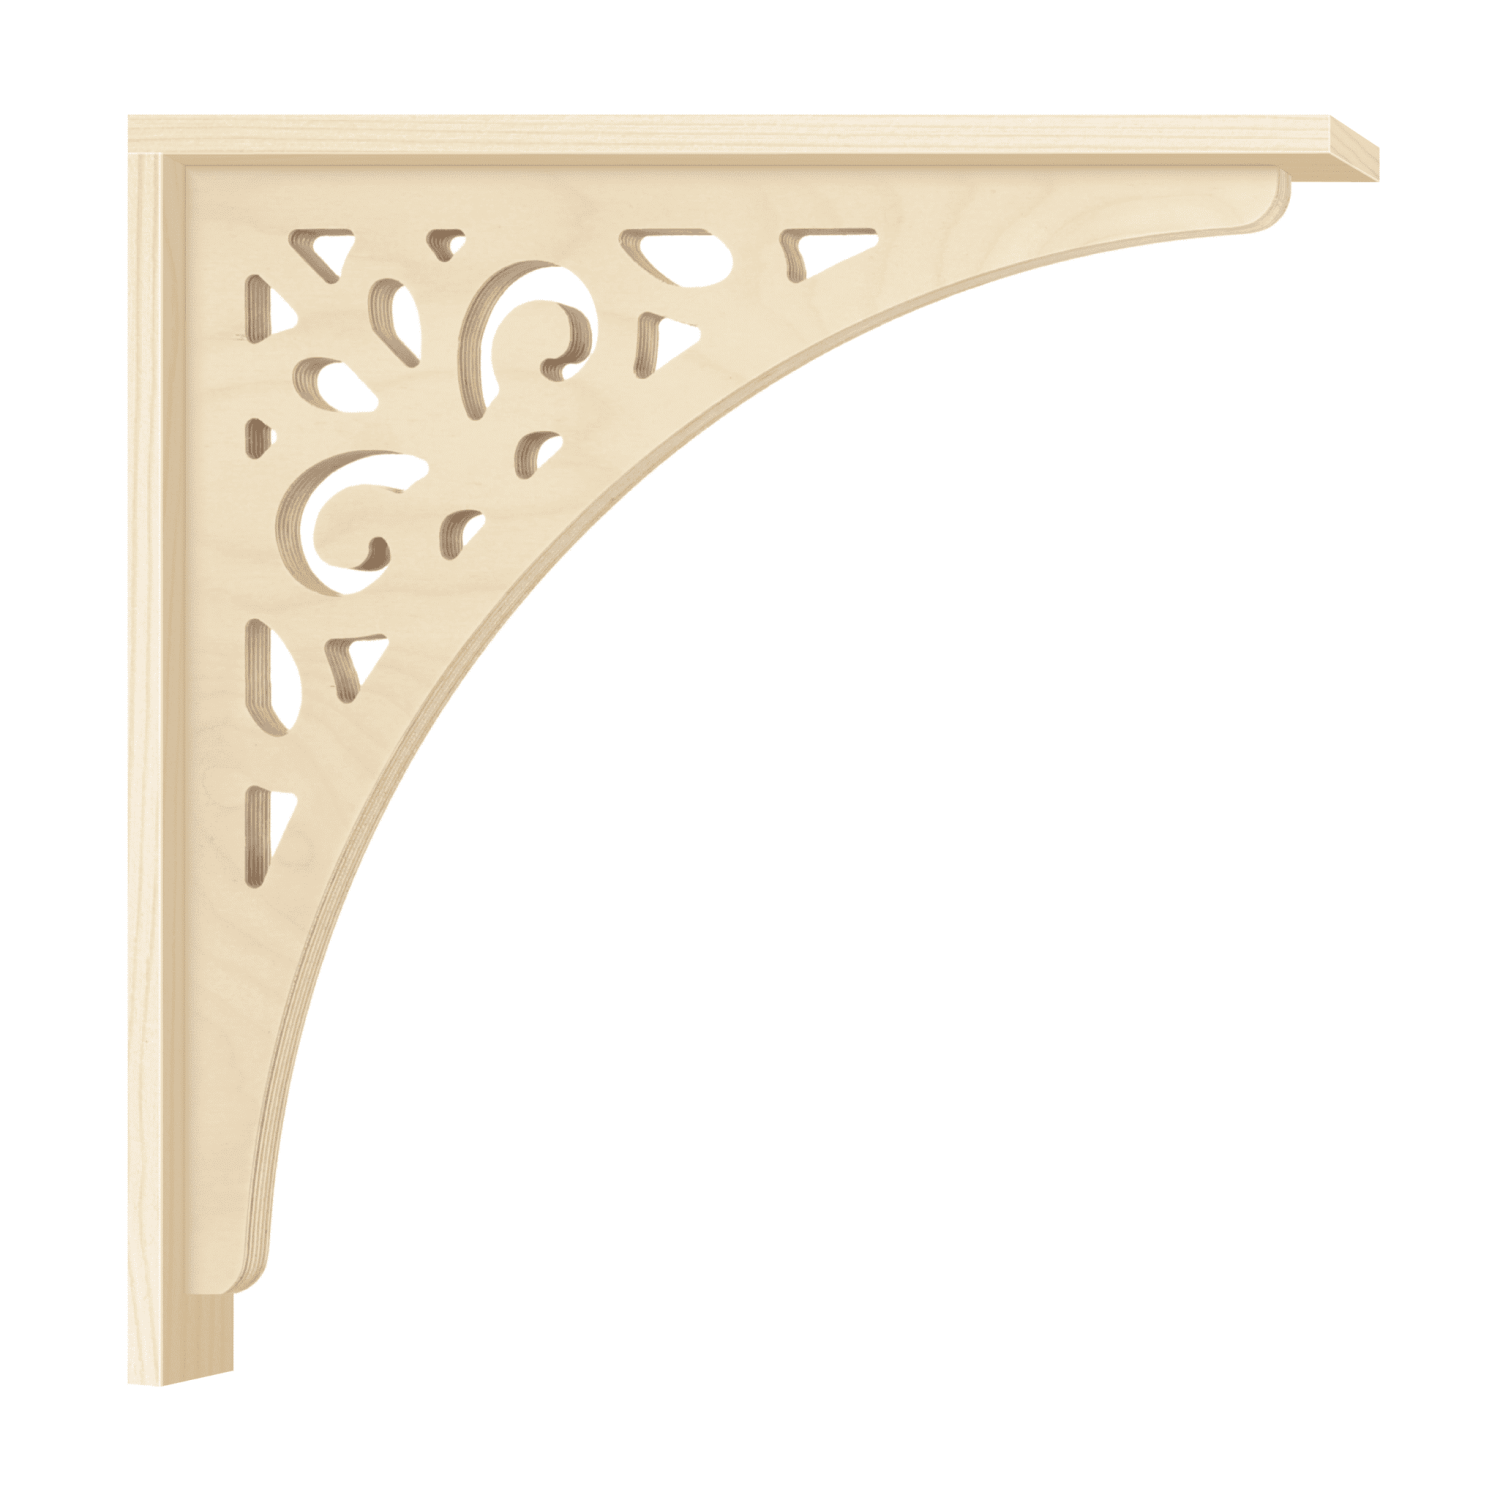 Bracket 015 – Victorian corbel for porch and veranda with decorative wooden strip